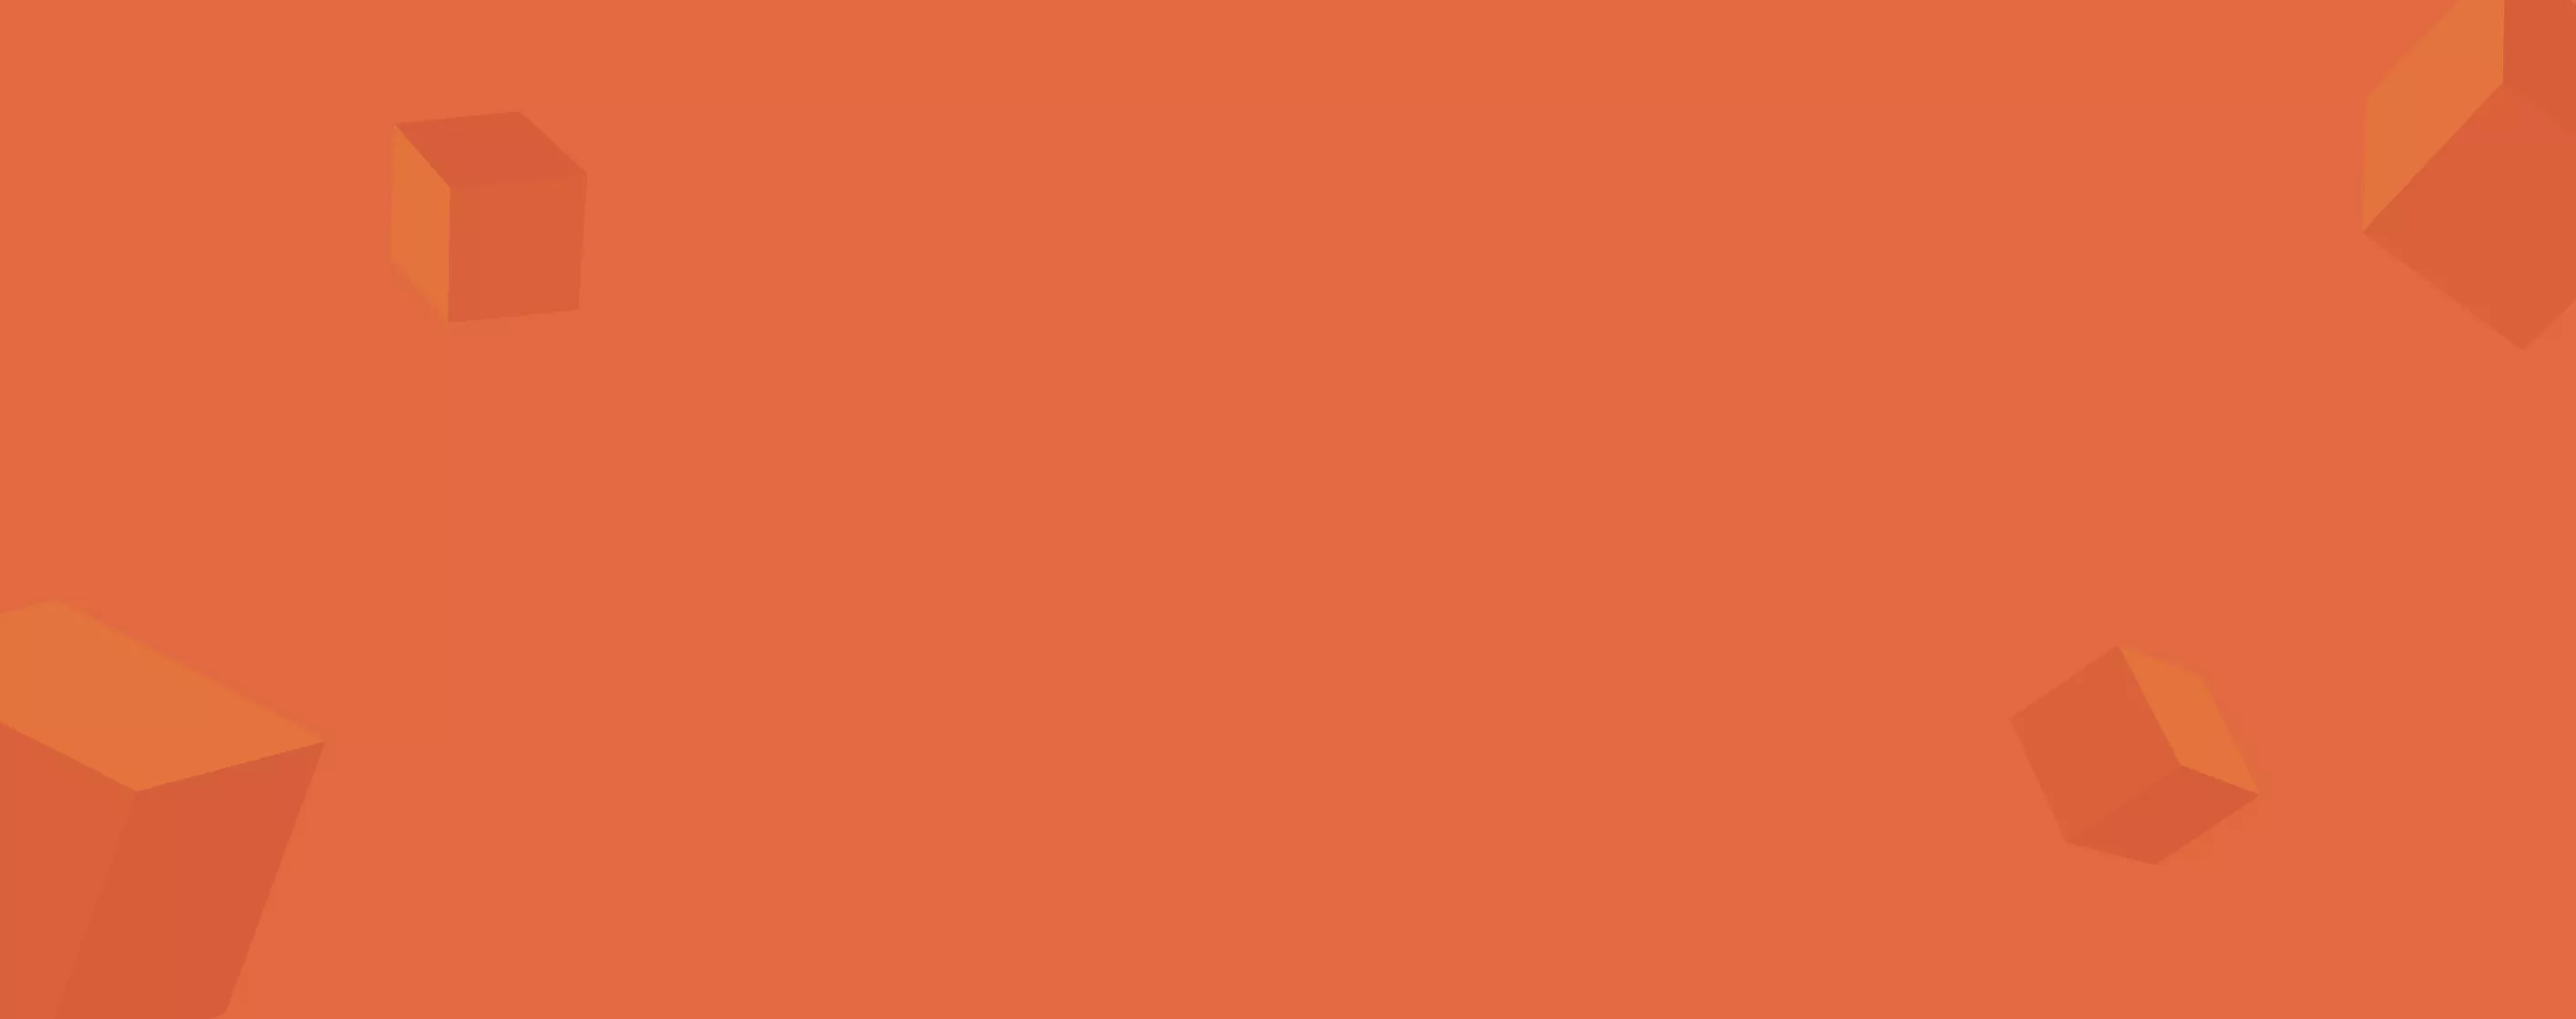 orange background with orange squares